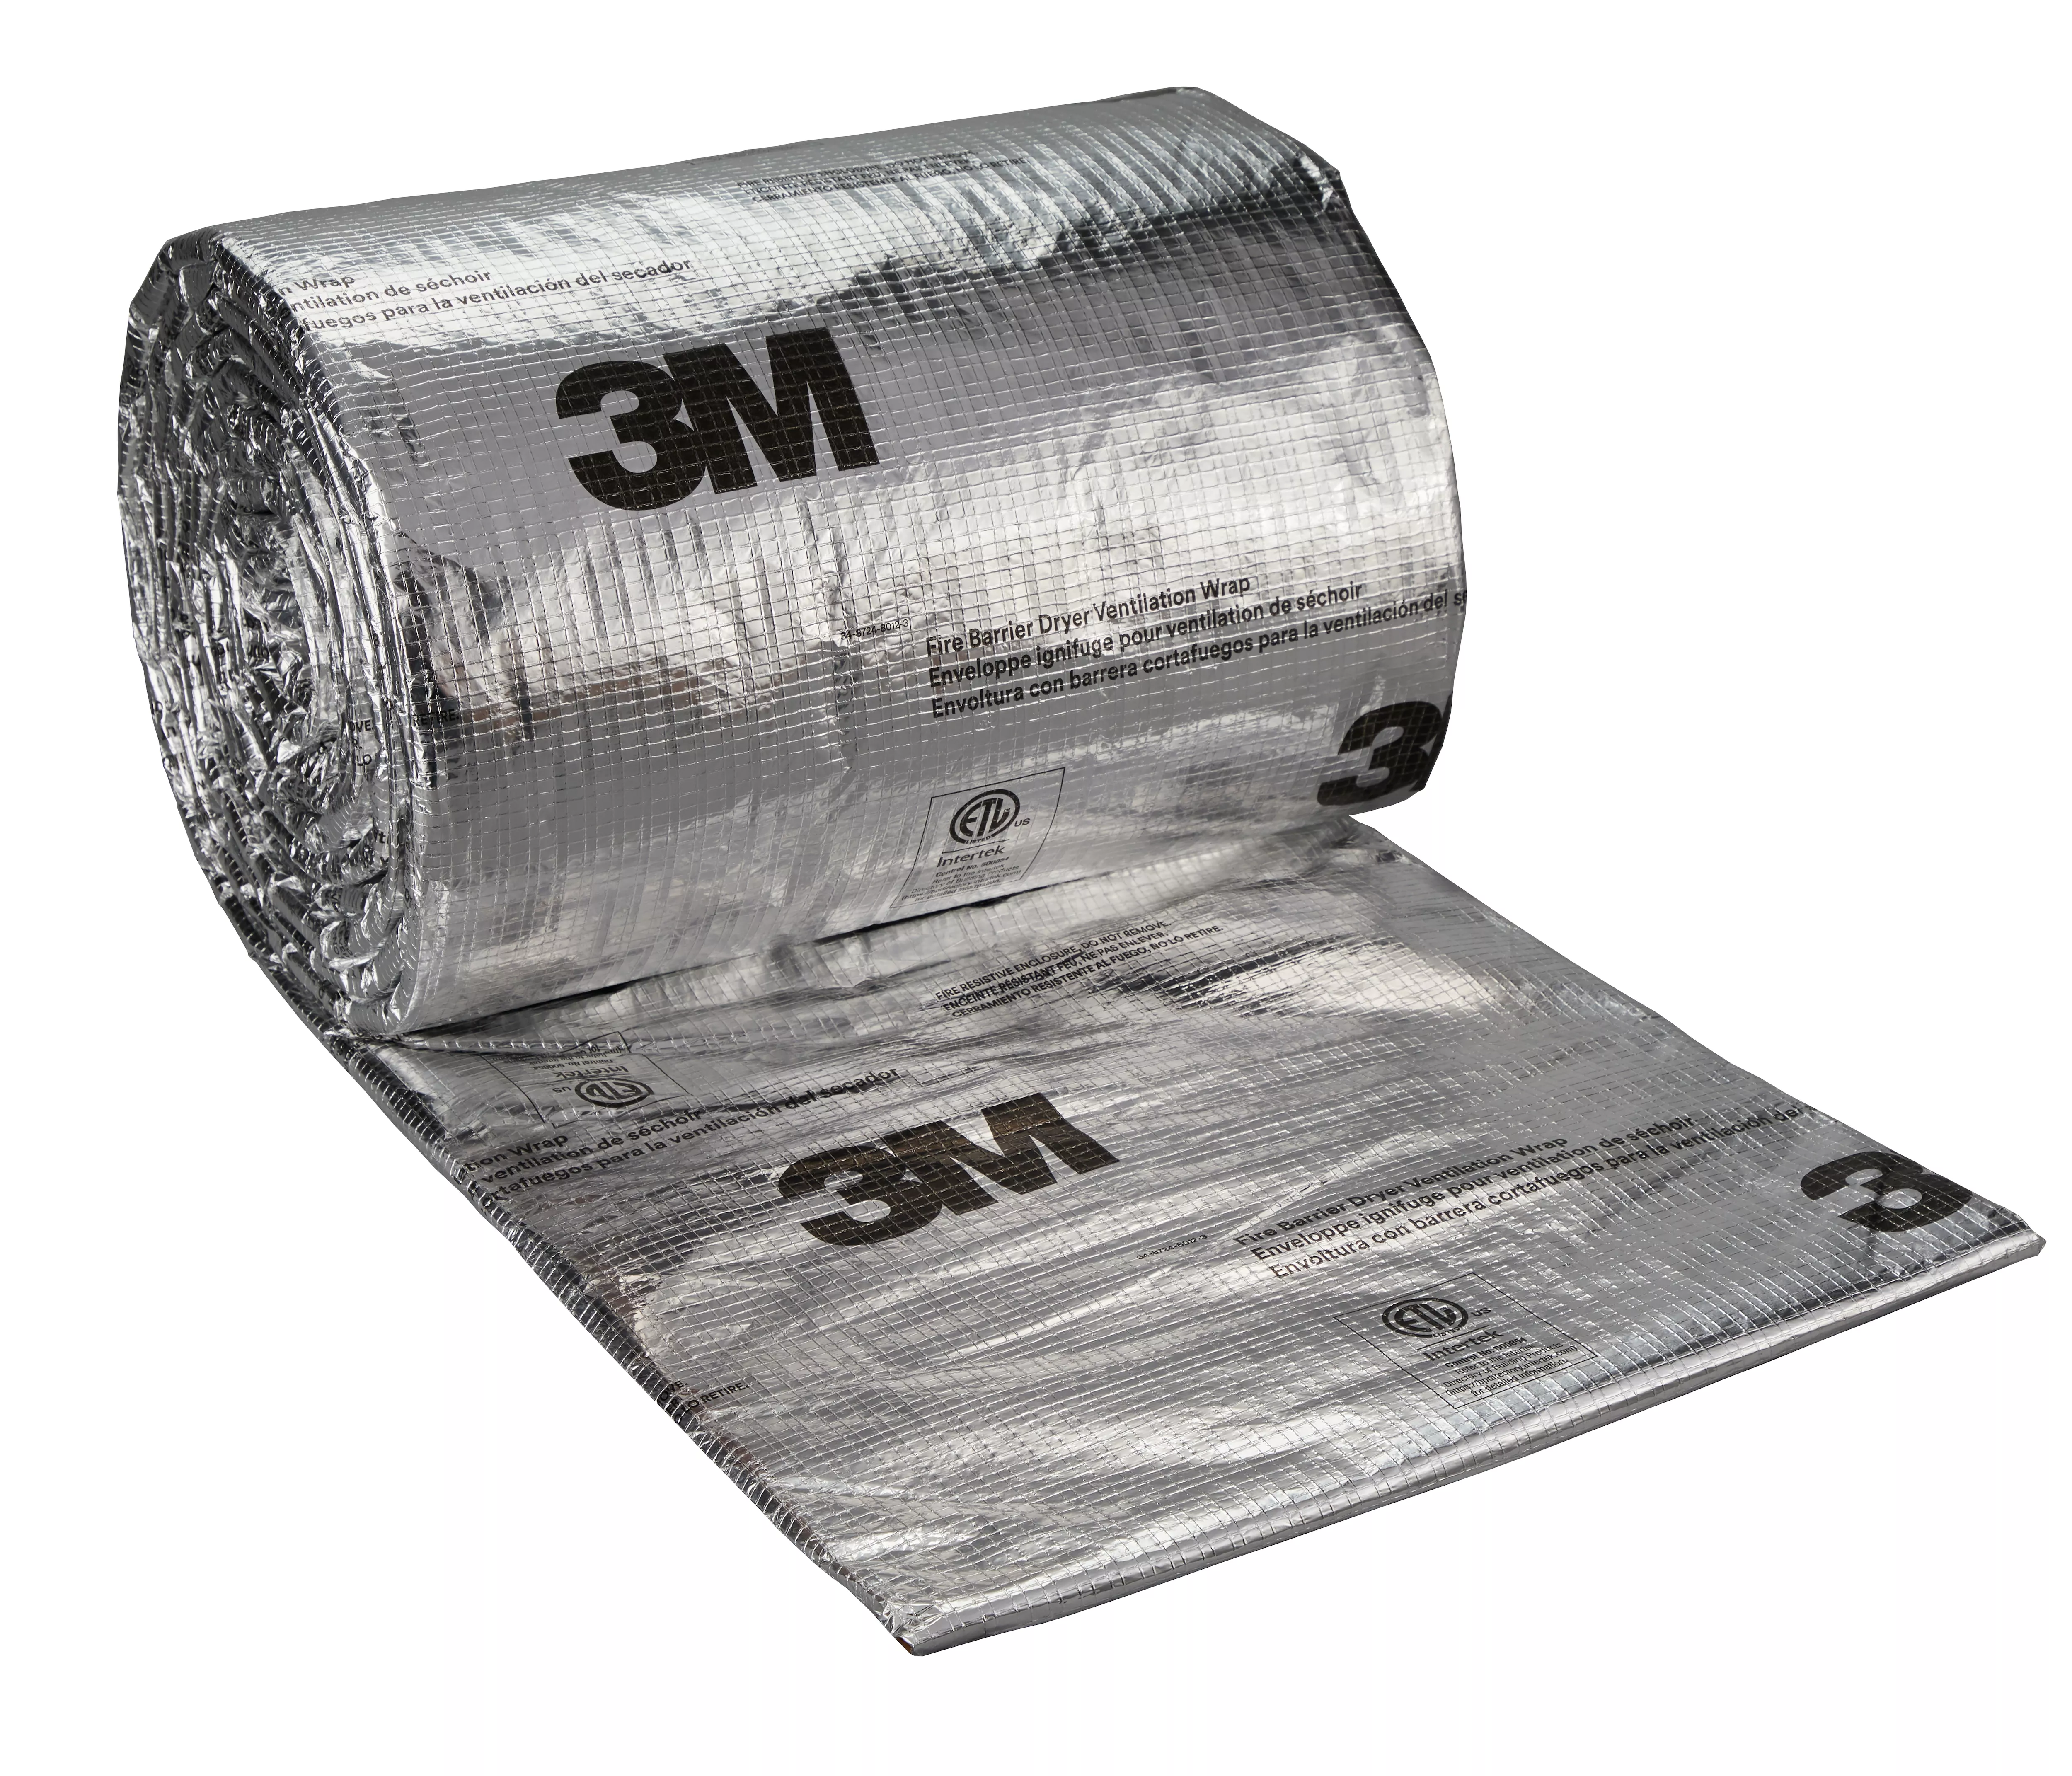 SKU 7100216418 | 3M™ Fire Barrier Dryer Ventilation Wrap DVW16